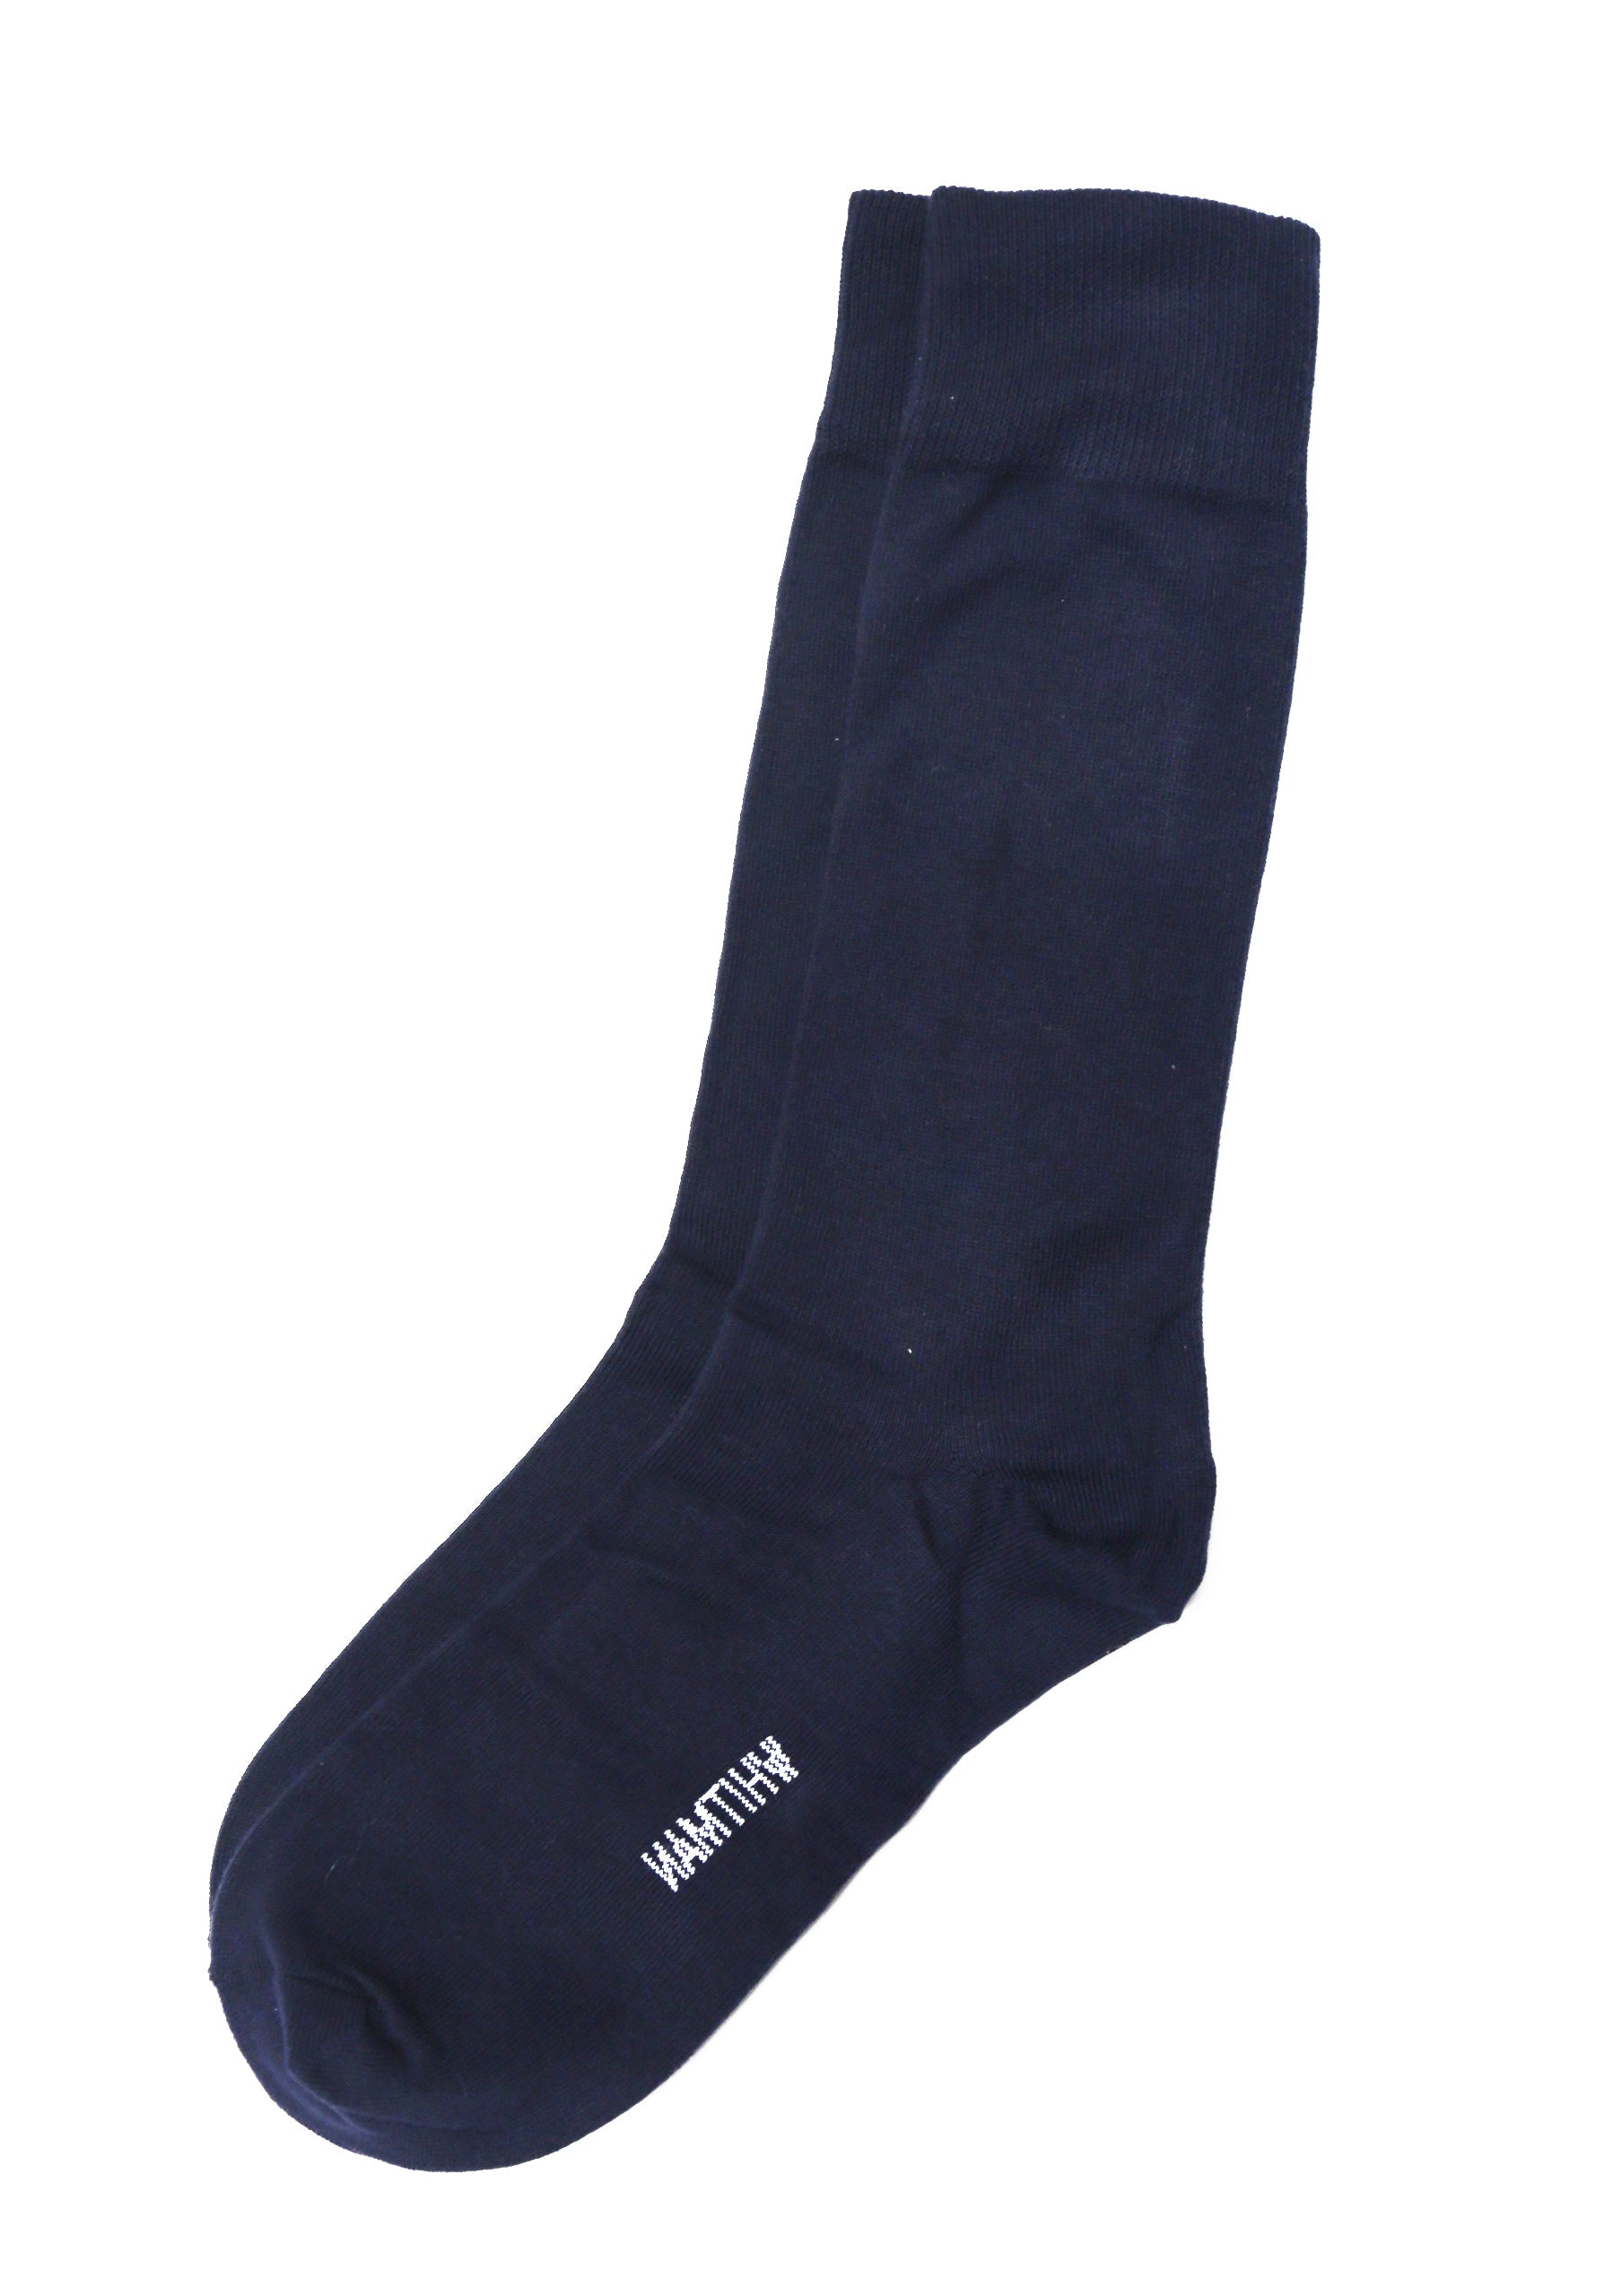 socks Unicolor blue dark